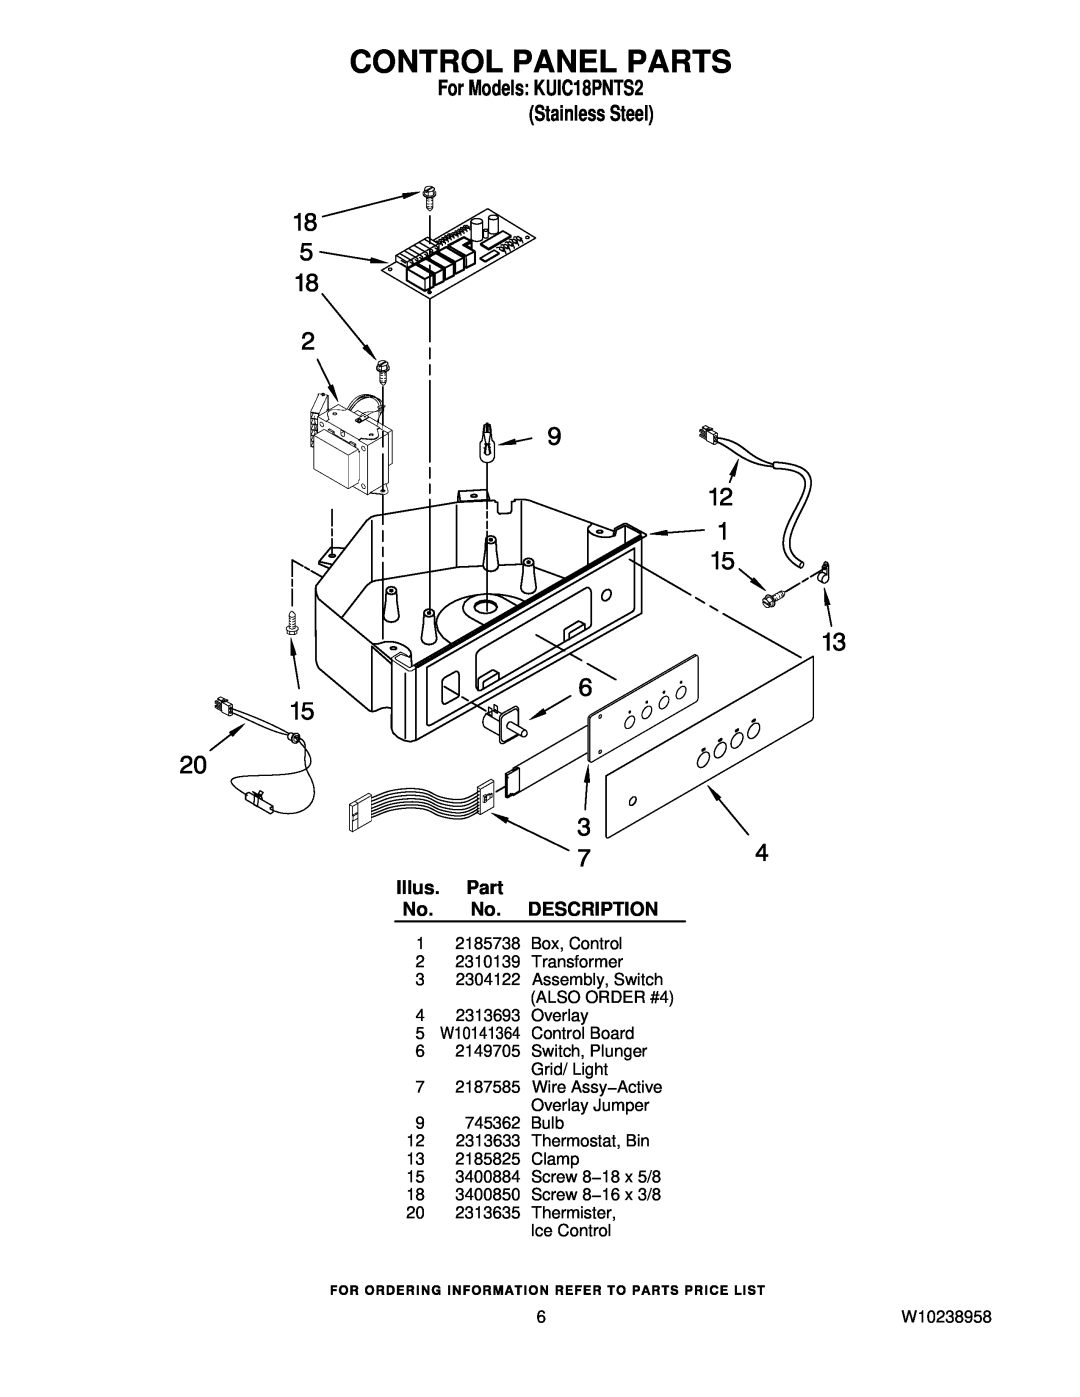 KitchenAid manual Control Panel Parts, For Models KUIC18PNTS2 Stainless Steel, Illus. Part No. No. DESCRIPTION 